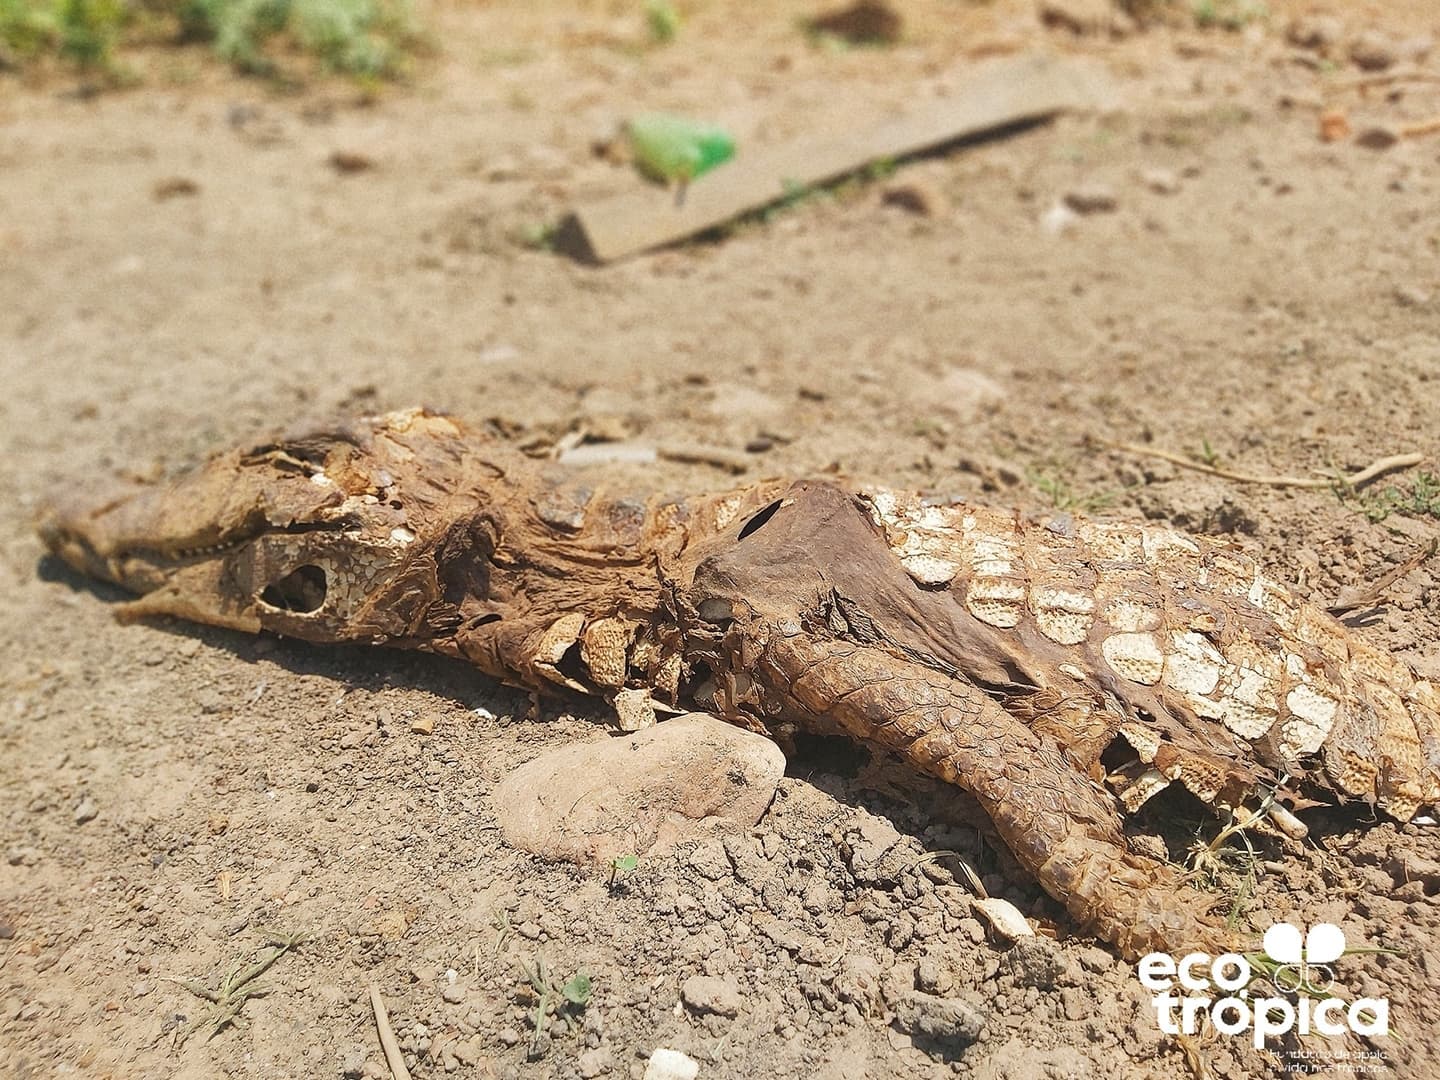 A dessicated crocodile lies dead in the dirt.